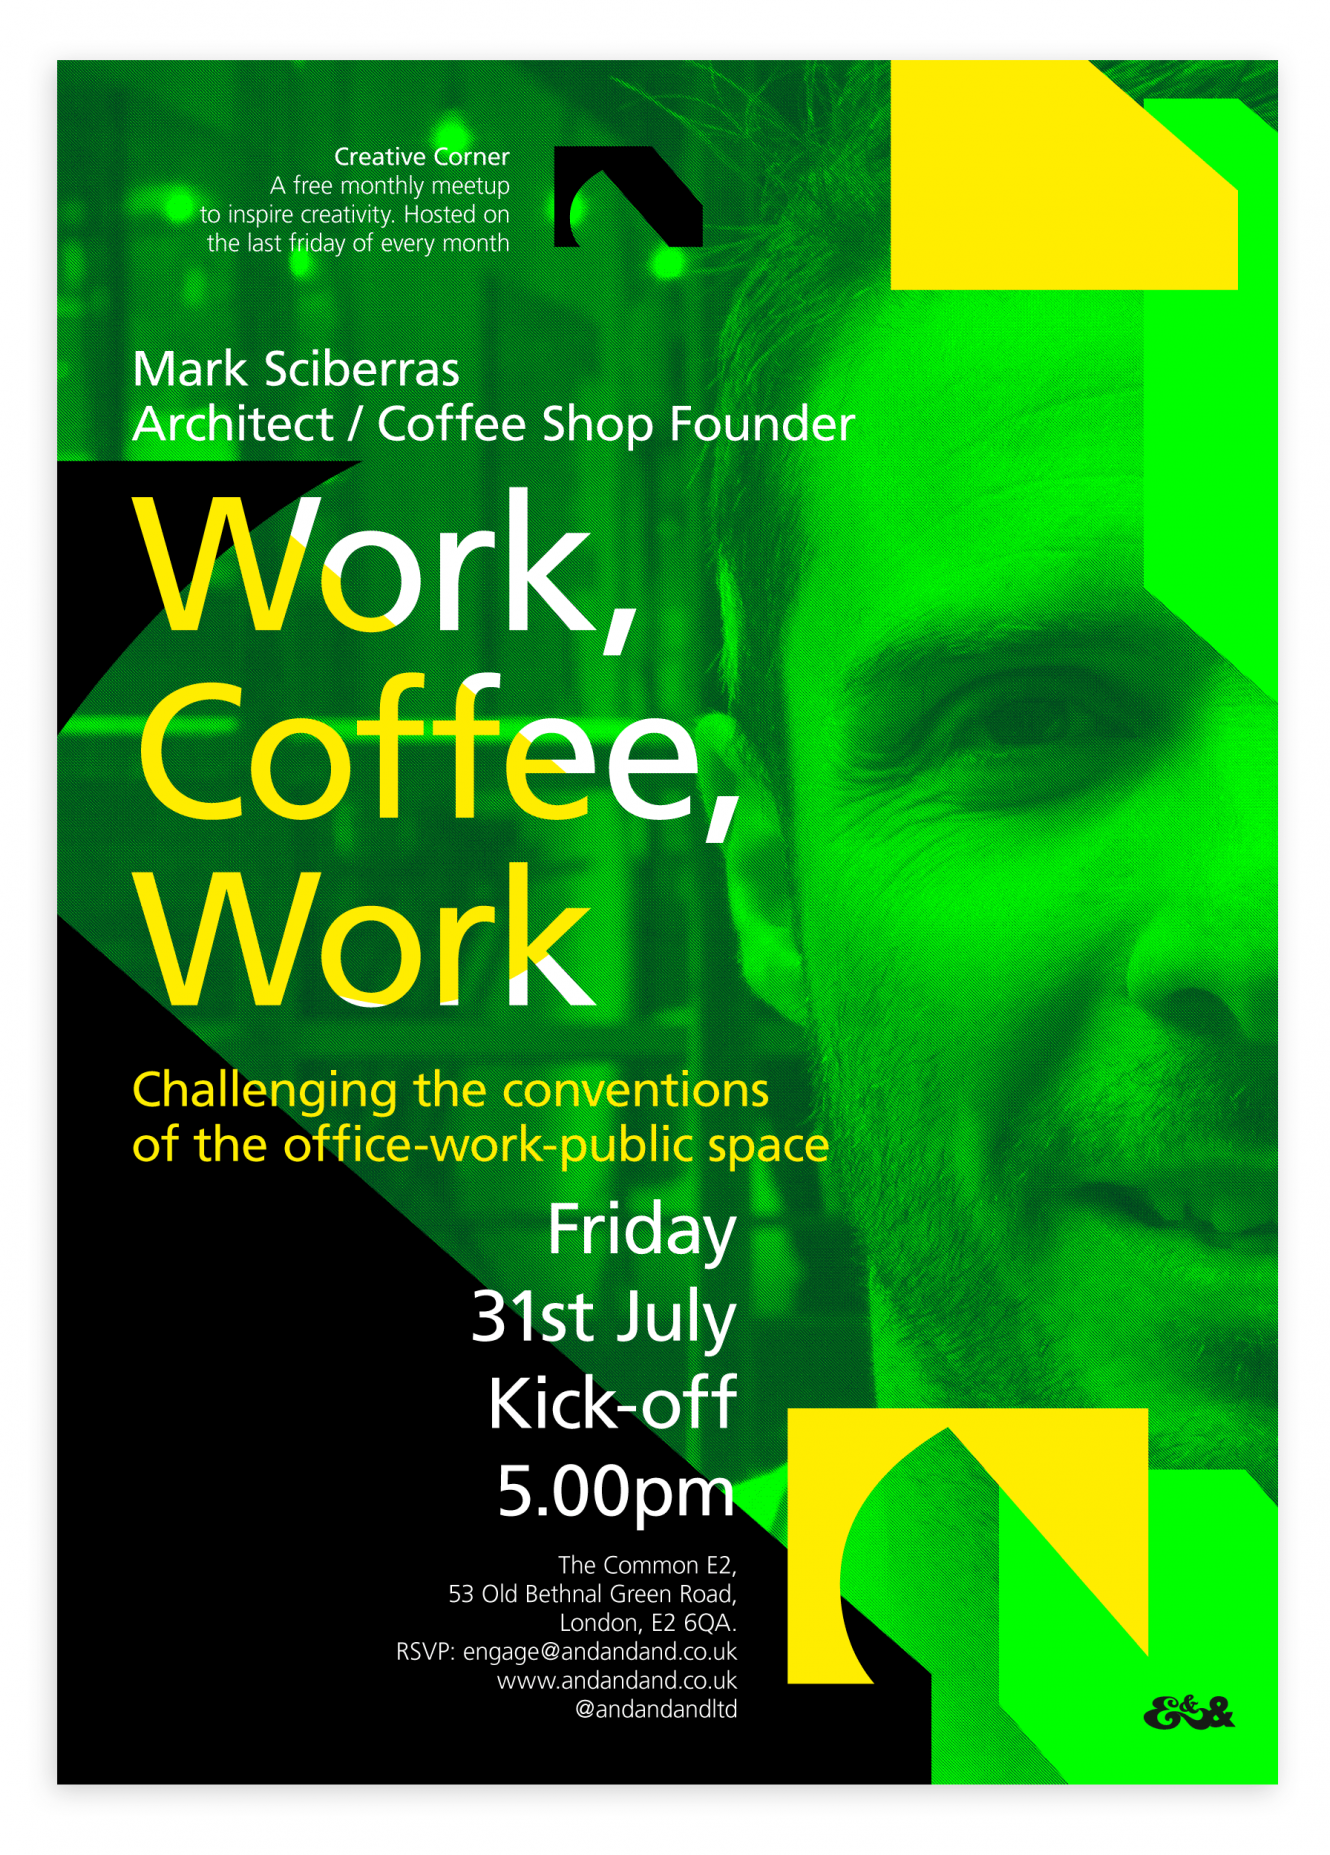 Creative Corner Poster   Mark Sciberras   Work,Coffee,Work